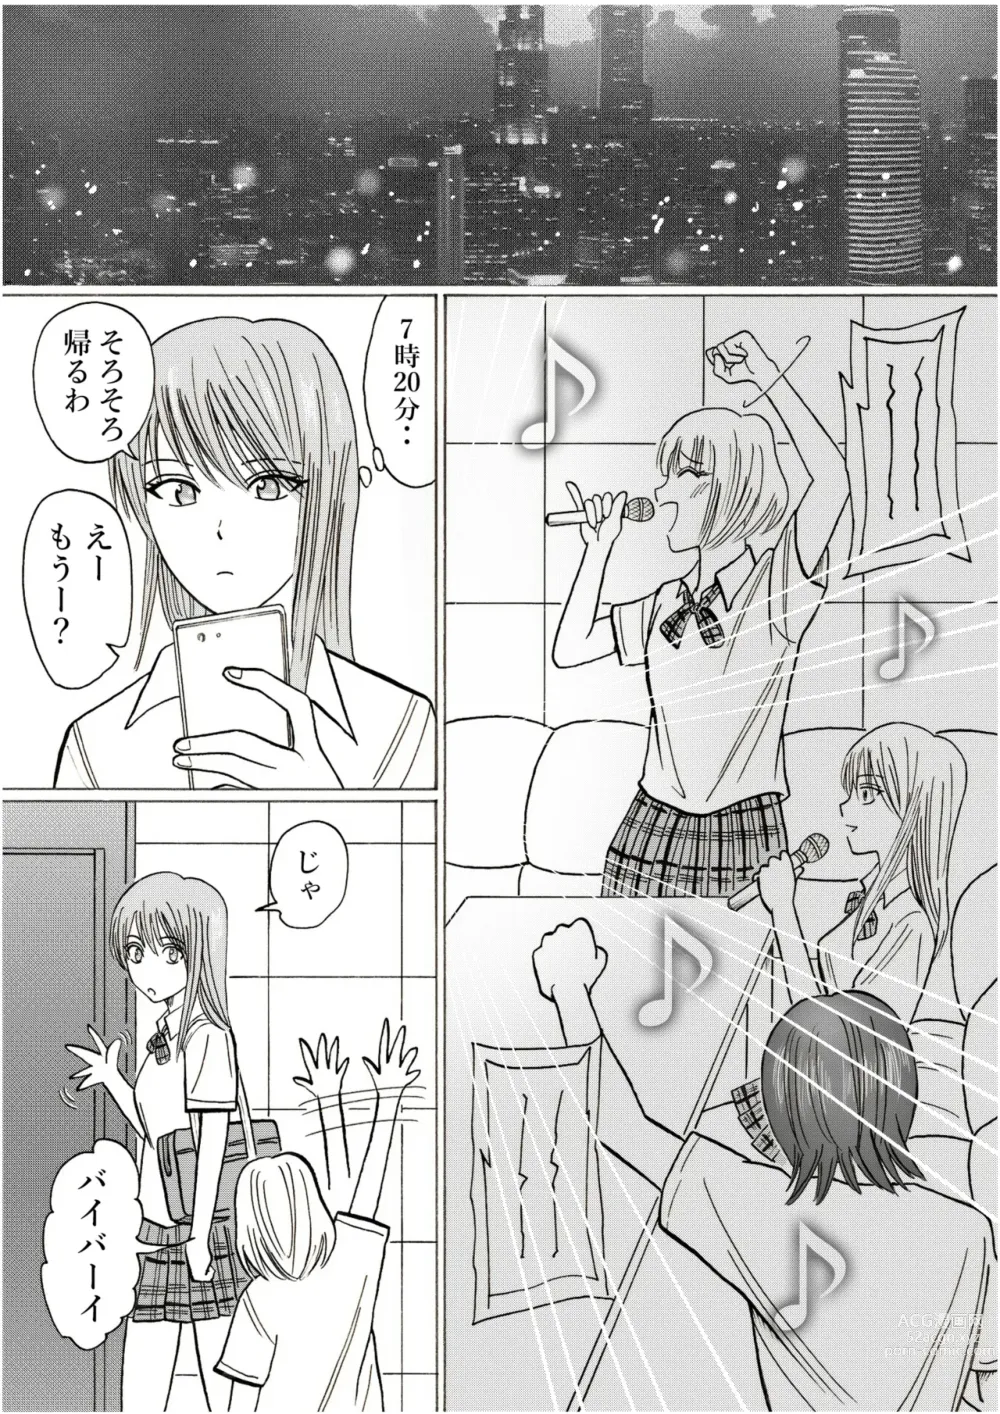 Page 11 of doujinshi Risato